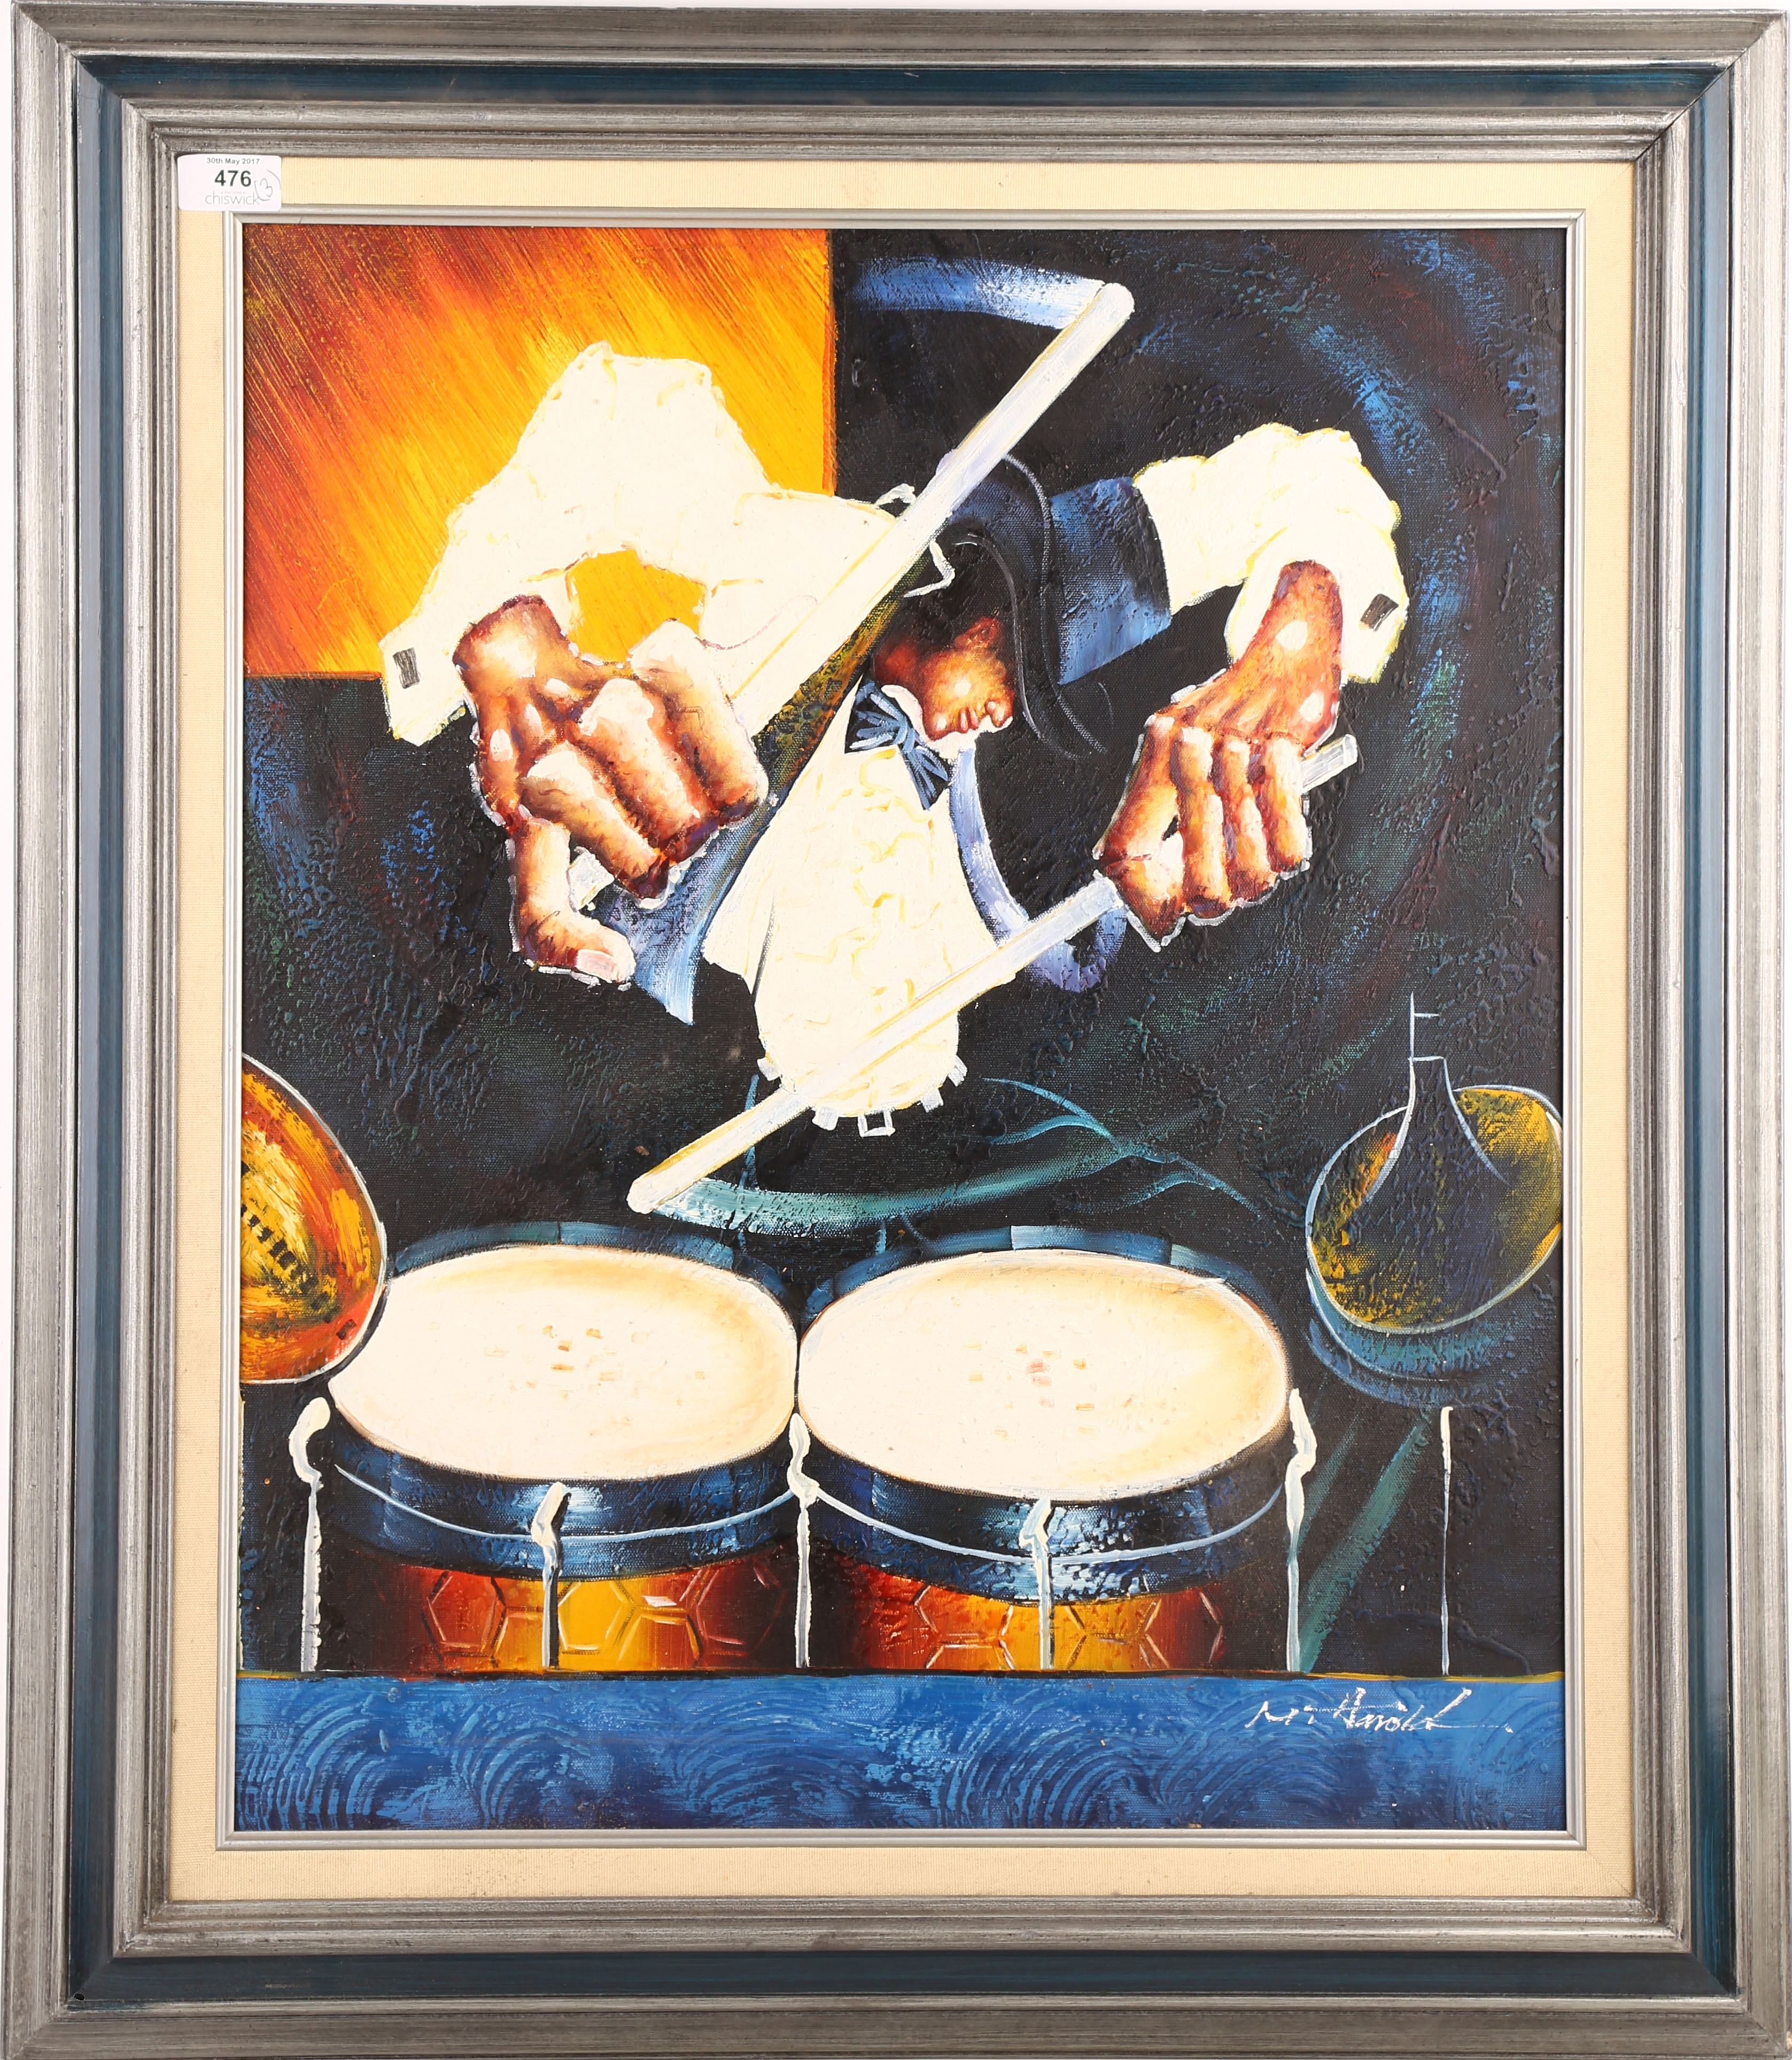 M. Harold (20th Century American). Jazz Musicians, three acrylics on canvas, 60 x 50cm.